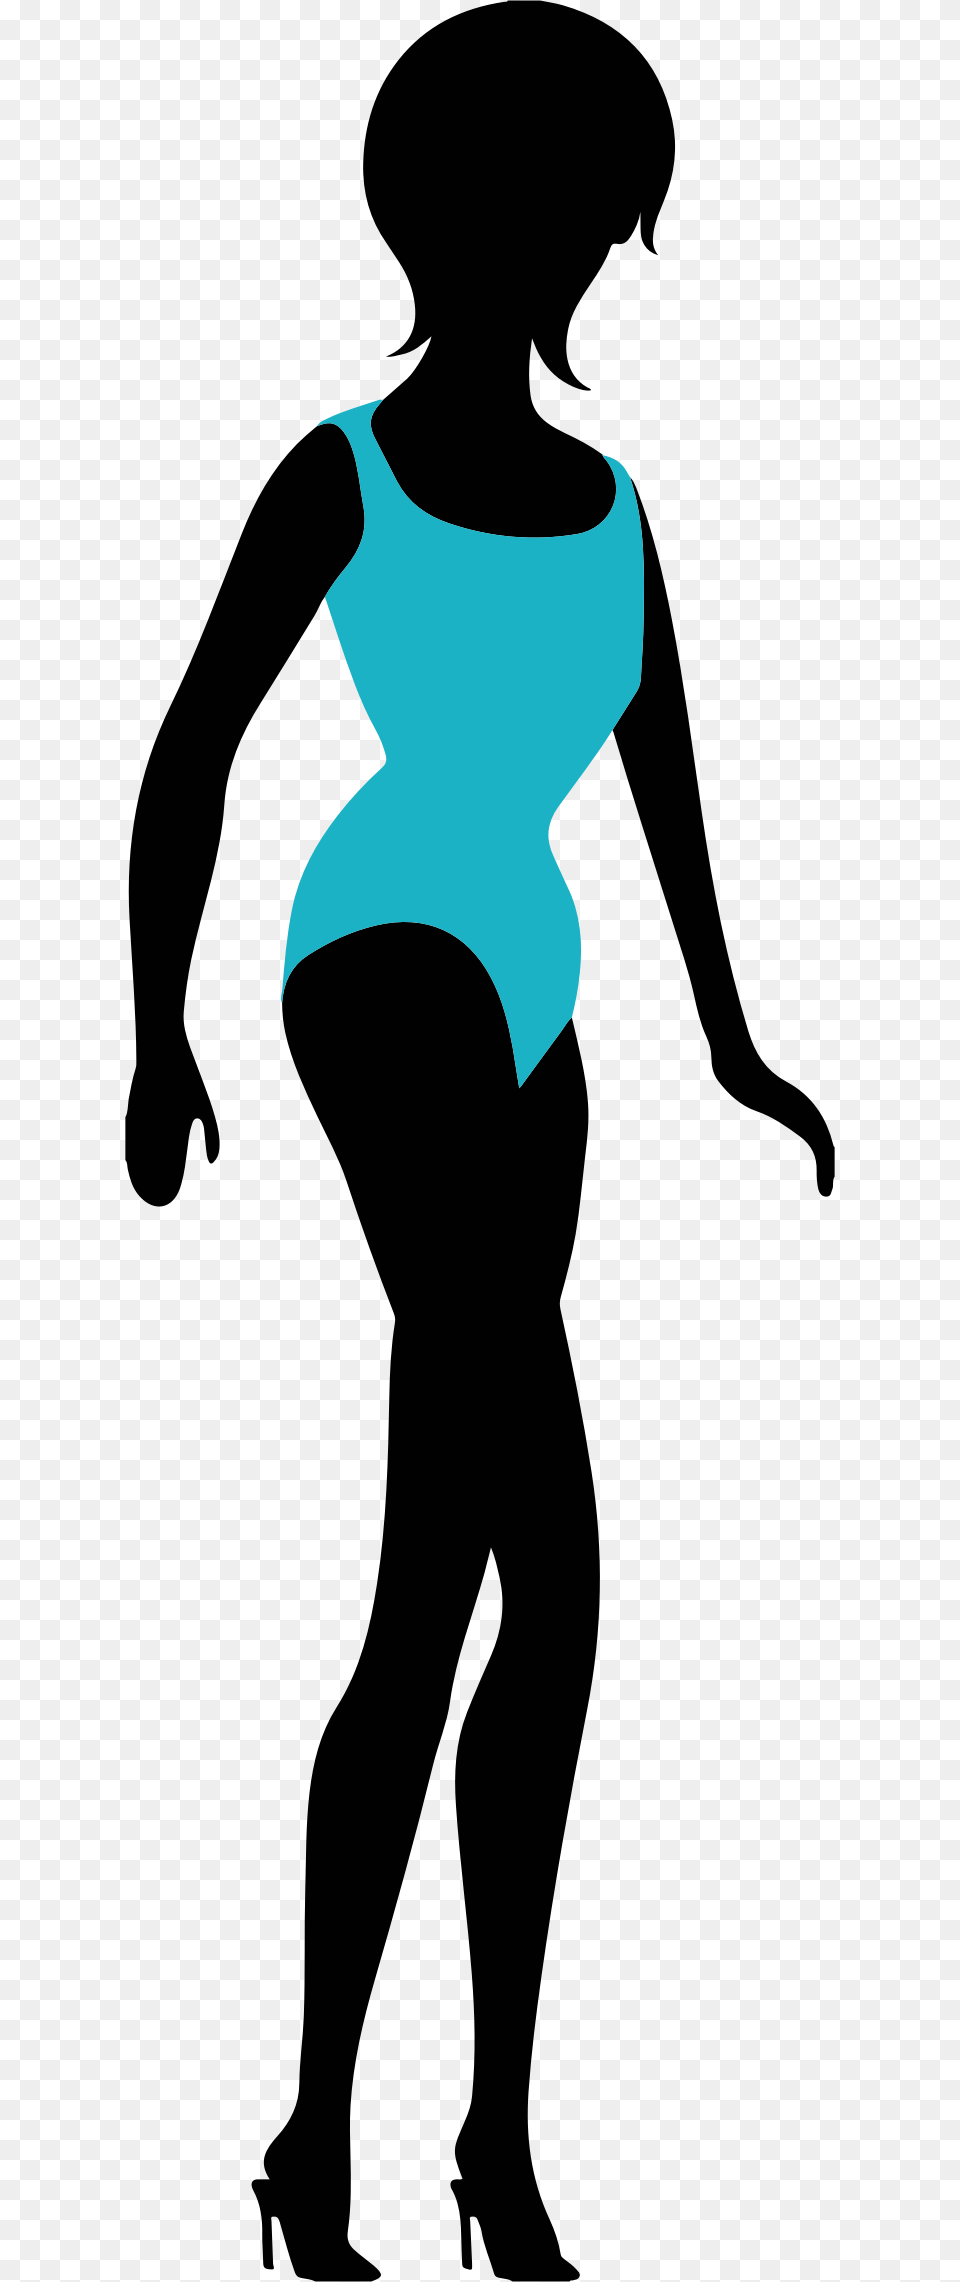 Woman In Bikini Silhouette Clip Arts Silhueta De Biquni, Logo, Symbol, Clothing, Swimwear Png